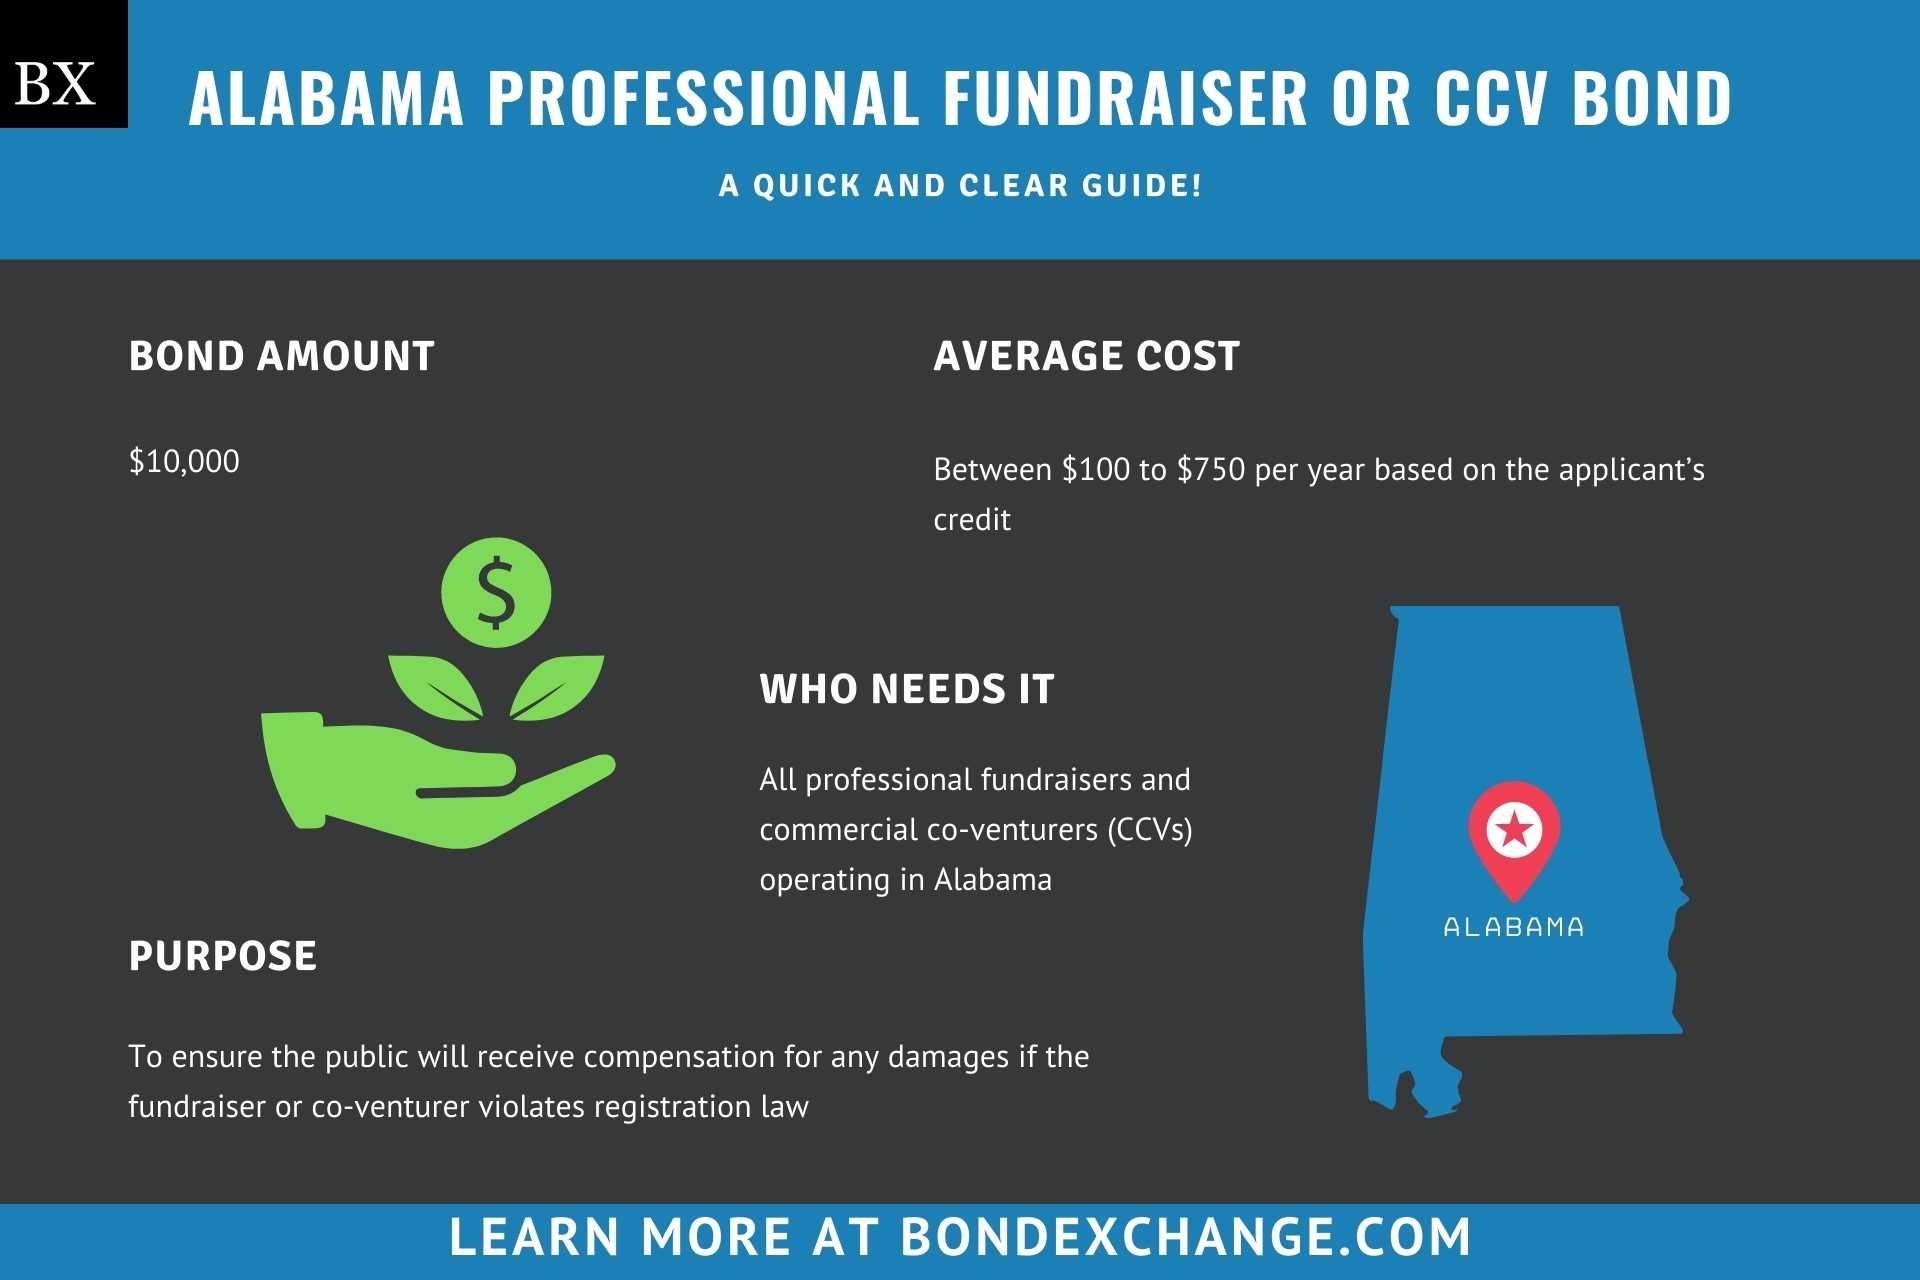 Alabama Professional Fundraiser or CCV Bond